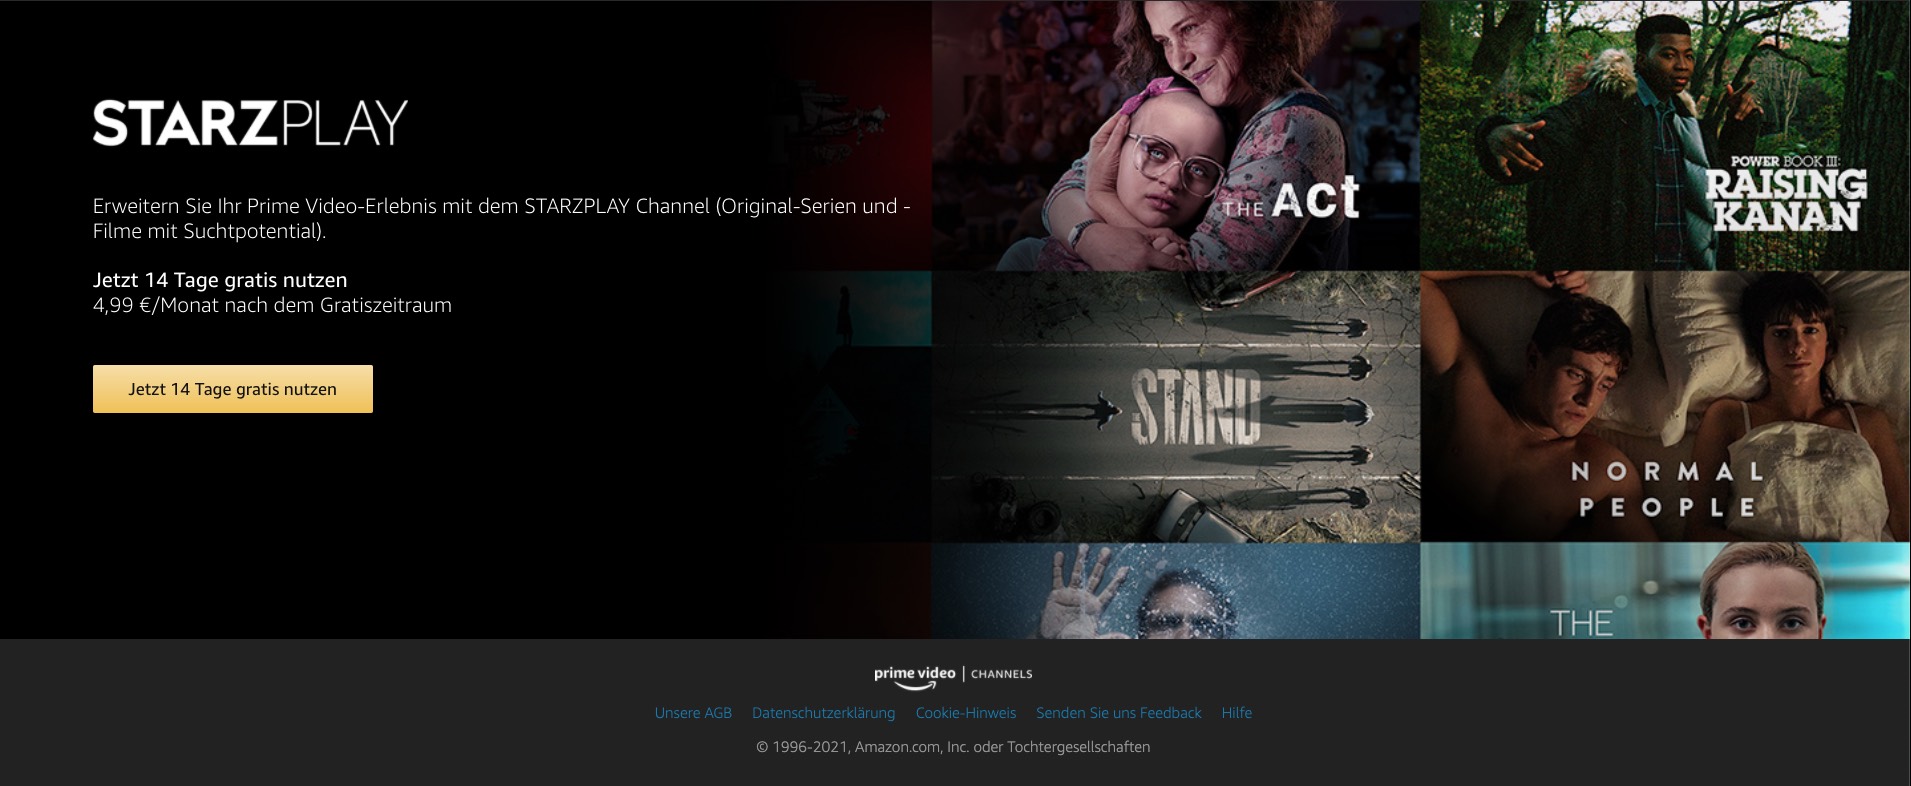 Amazon Prime Video Channel kostenlos testen